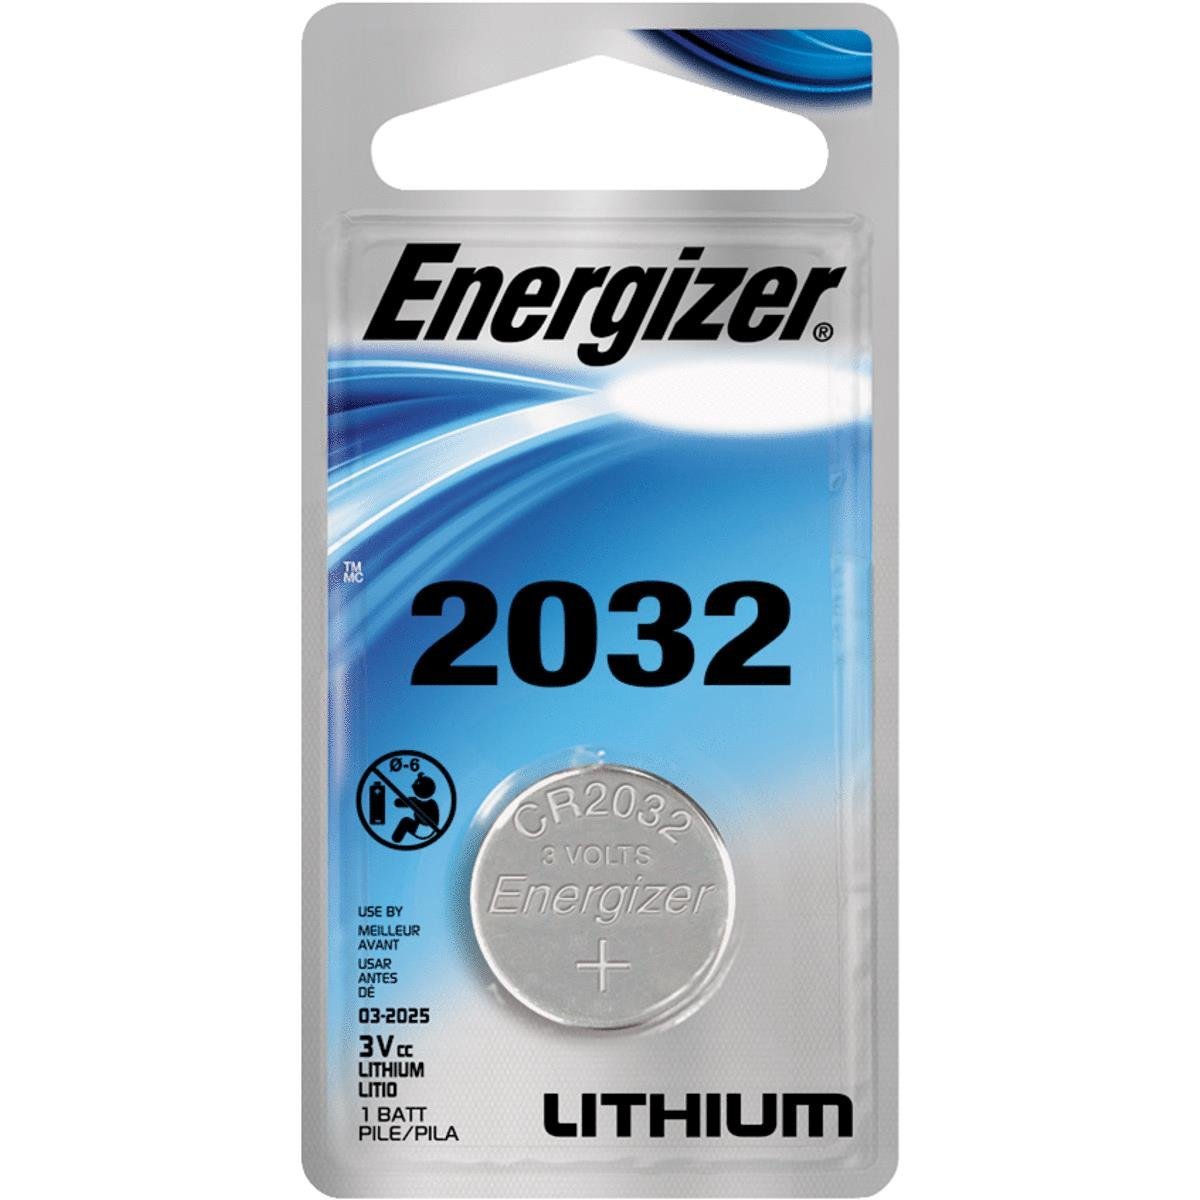 Energizer Lithium CR 2032 Battery